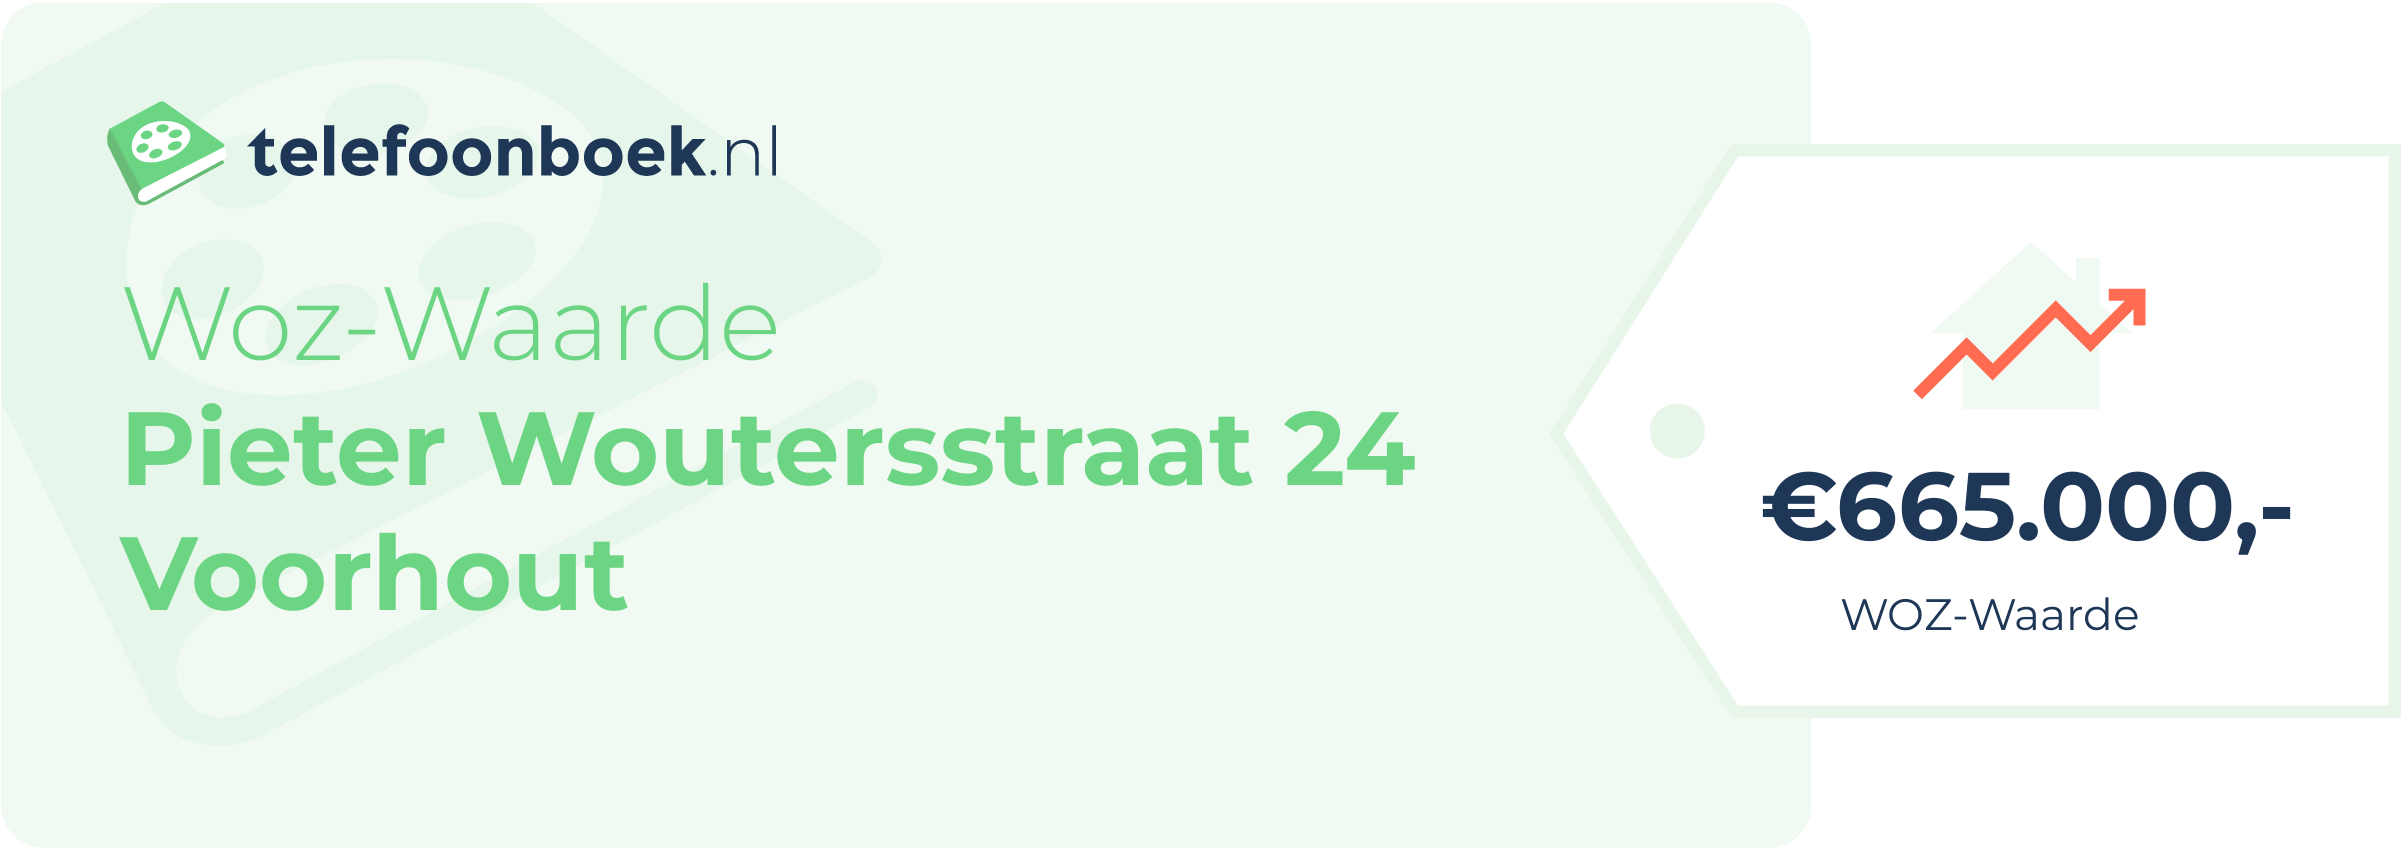 WOZ-waarde Pieter Woutersstraat 24 Voorhout